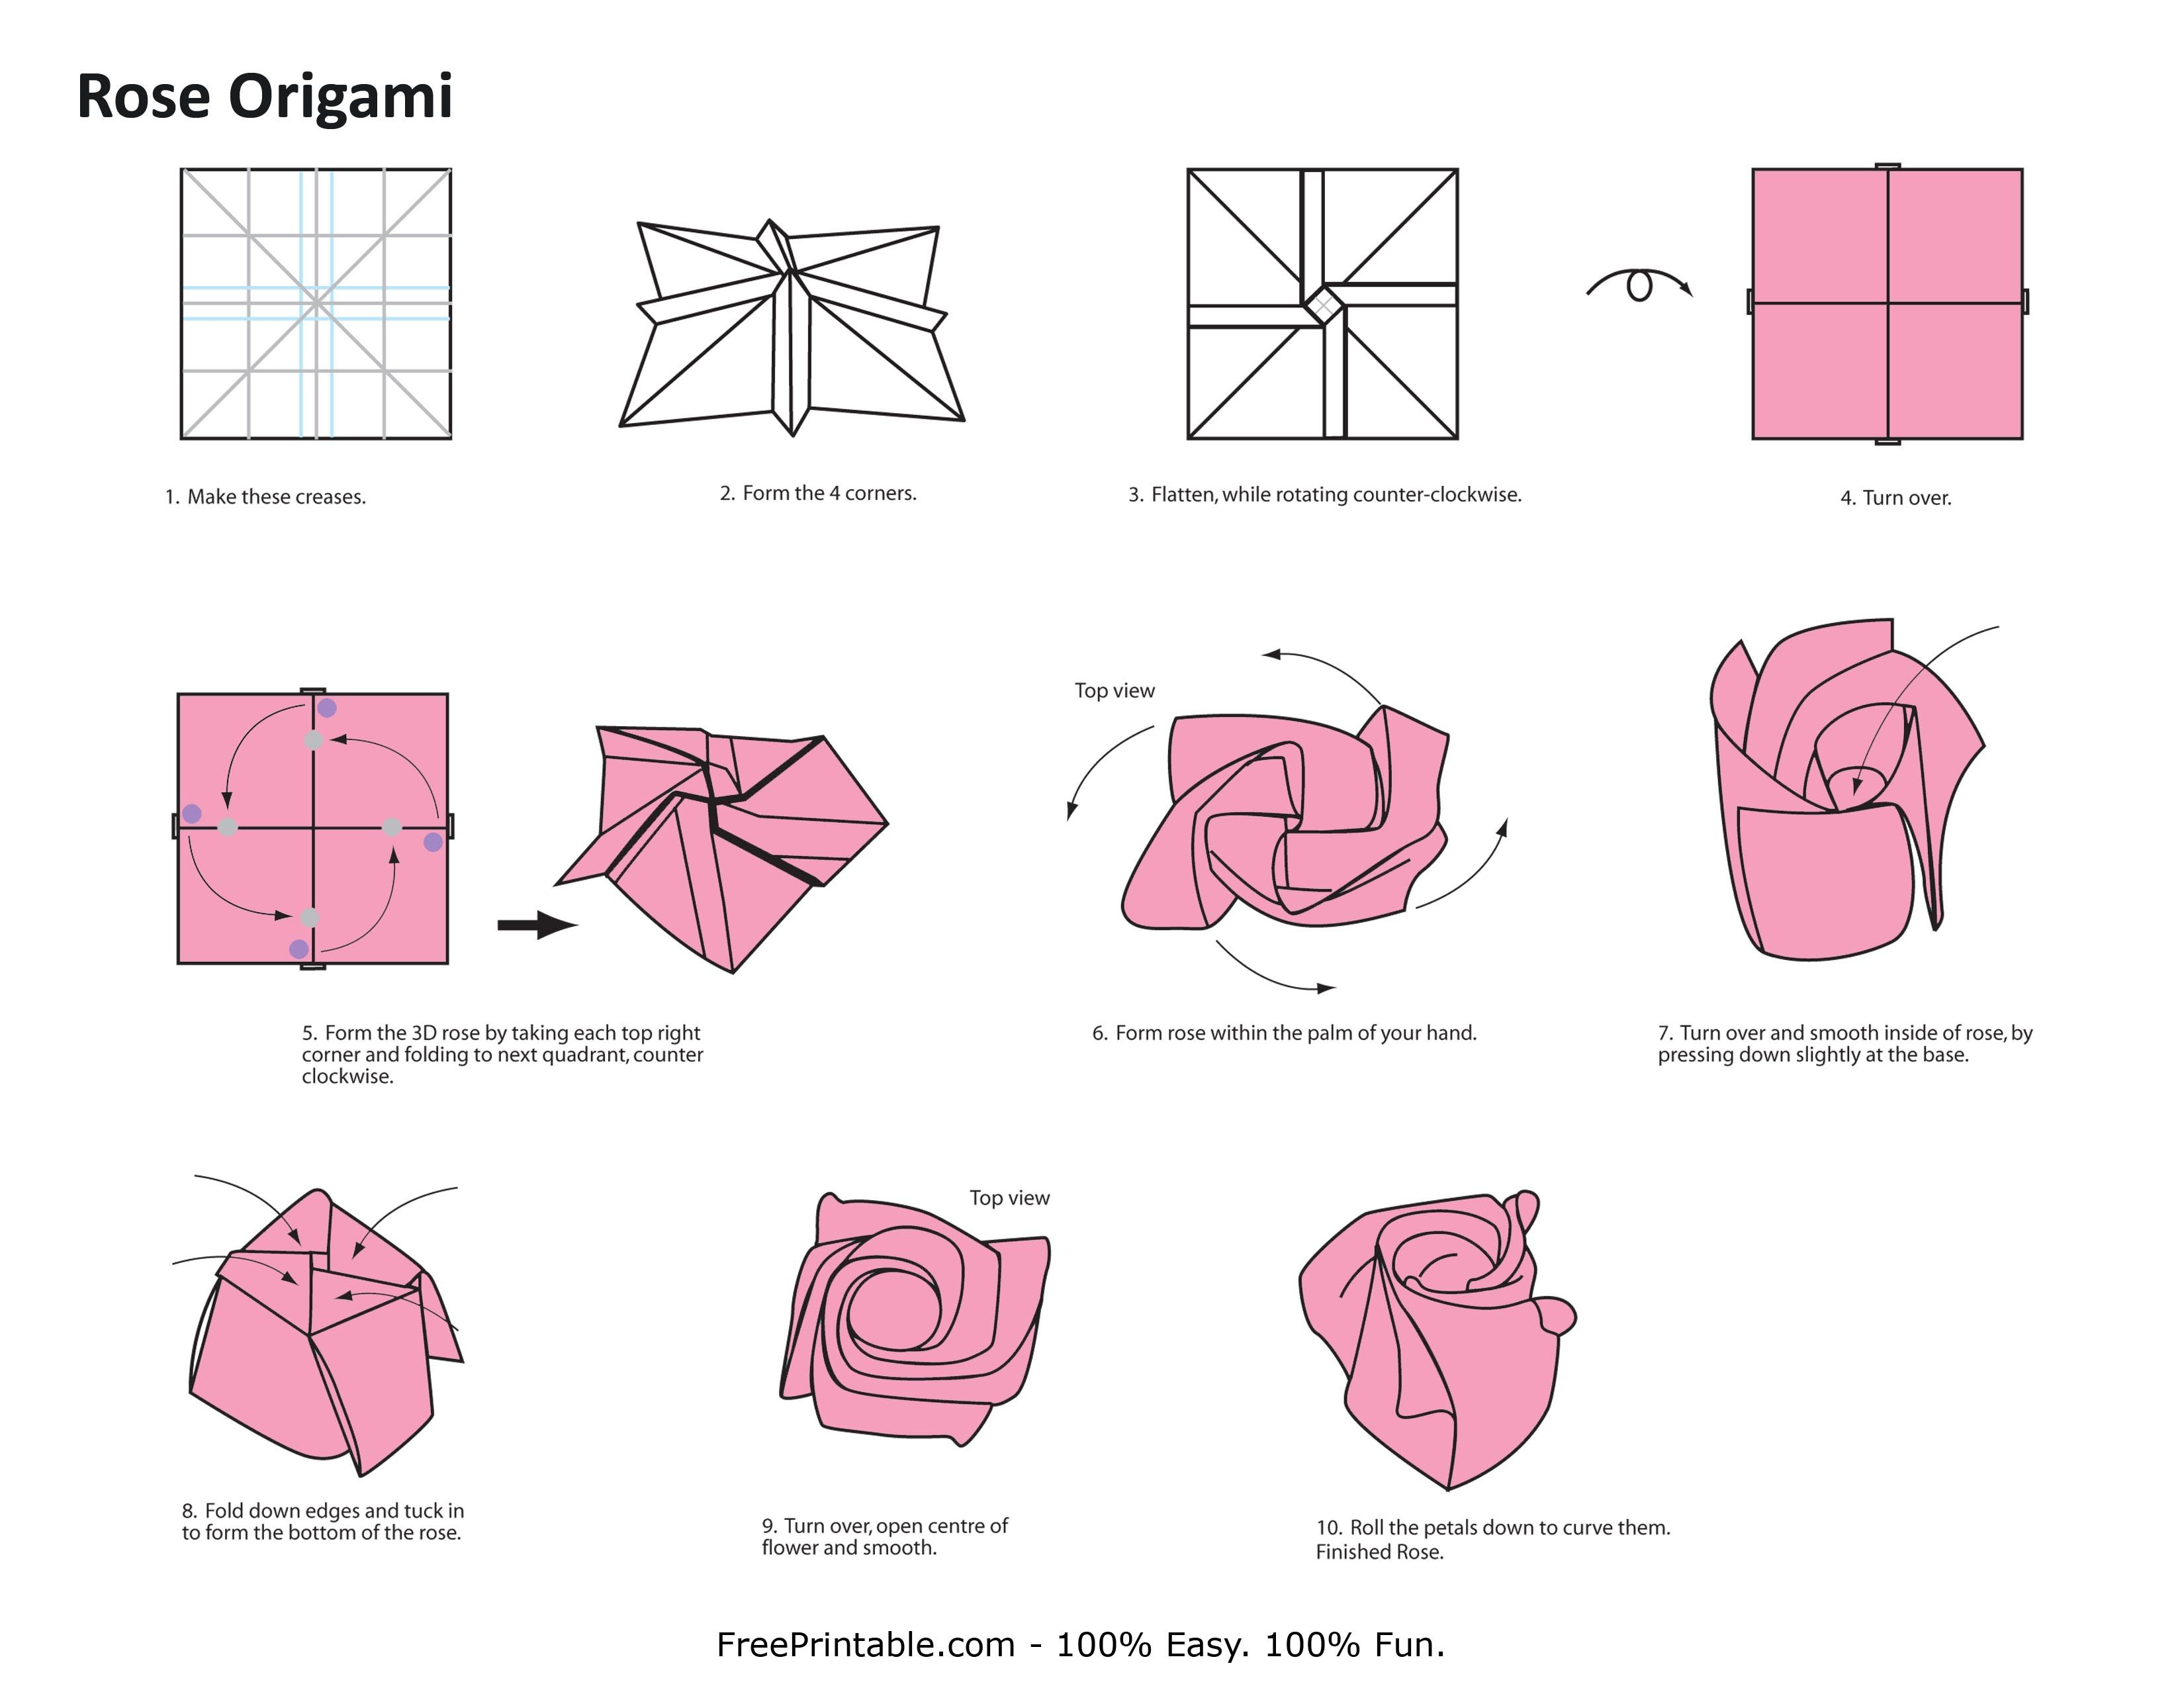 Épinglé Par Emma Emma Sur Origami | Origami Facile, Origami tout Origami Rose Facile A Faire